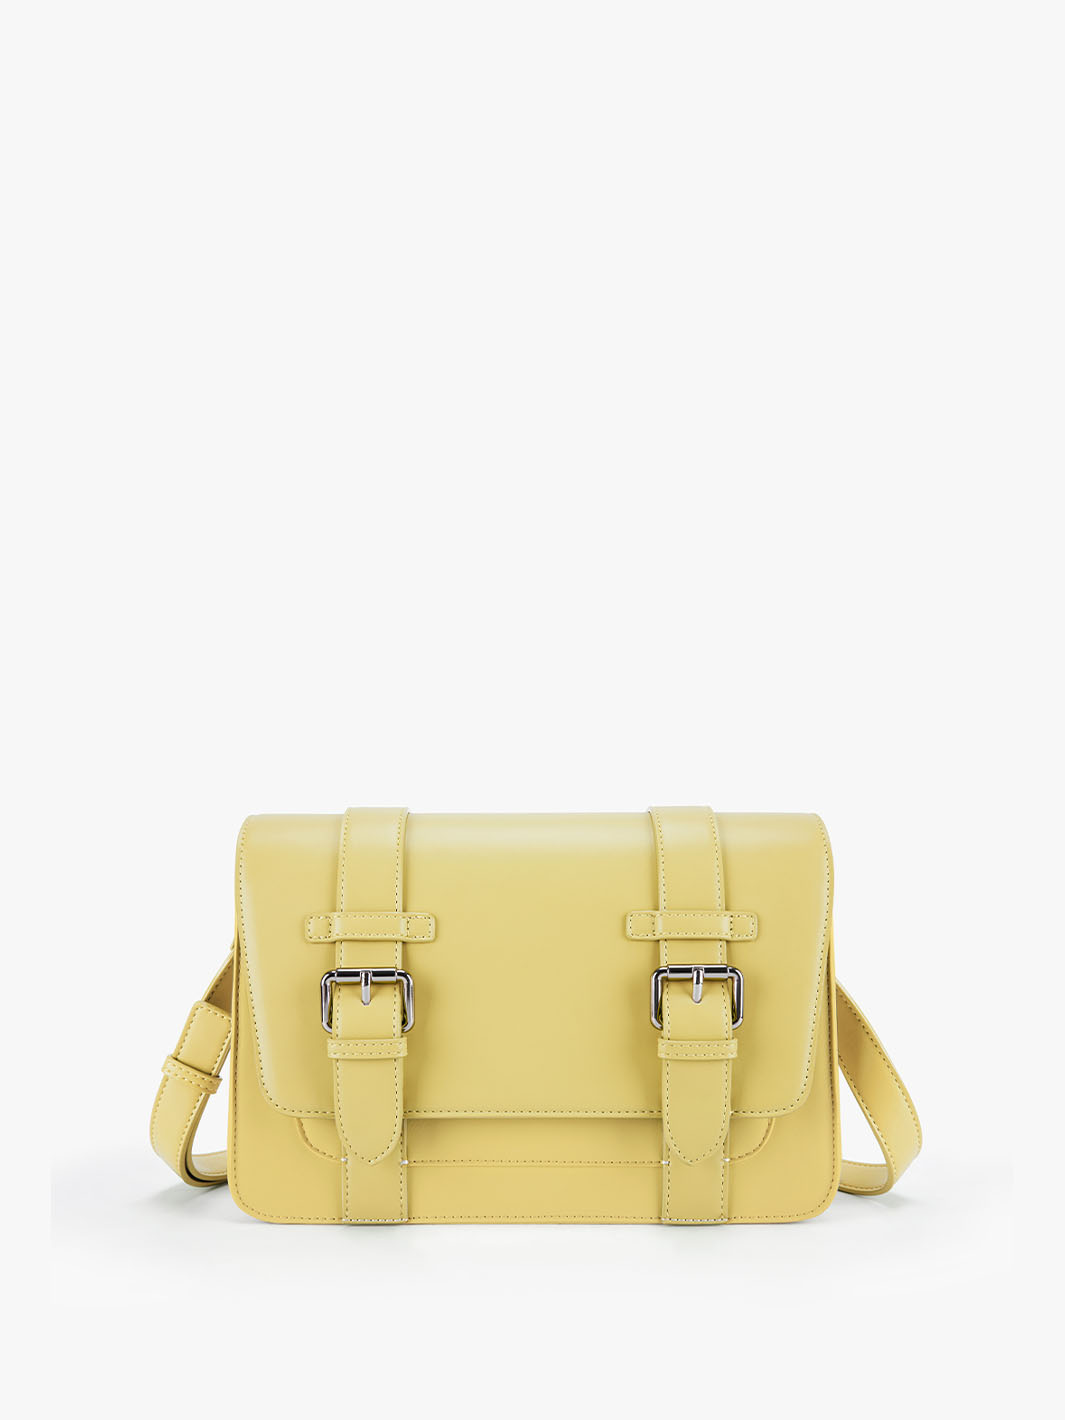 MINI COCO PURSE Crossbody Handbags (Yellow) - COOL KIDS BKLYN BOUTIQUE LLC